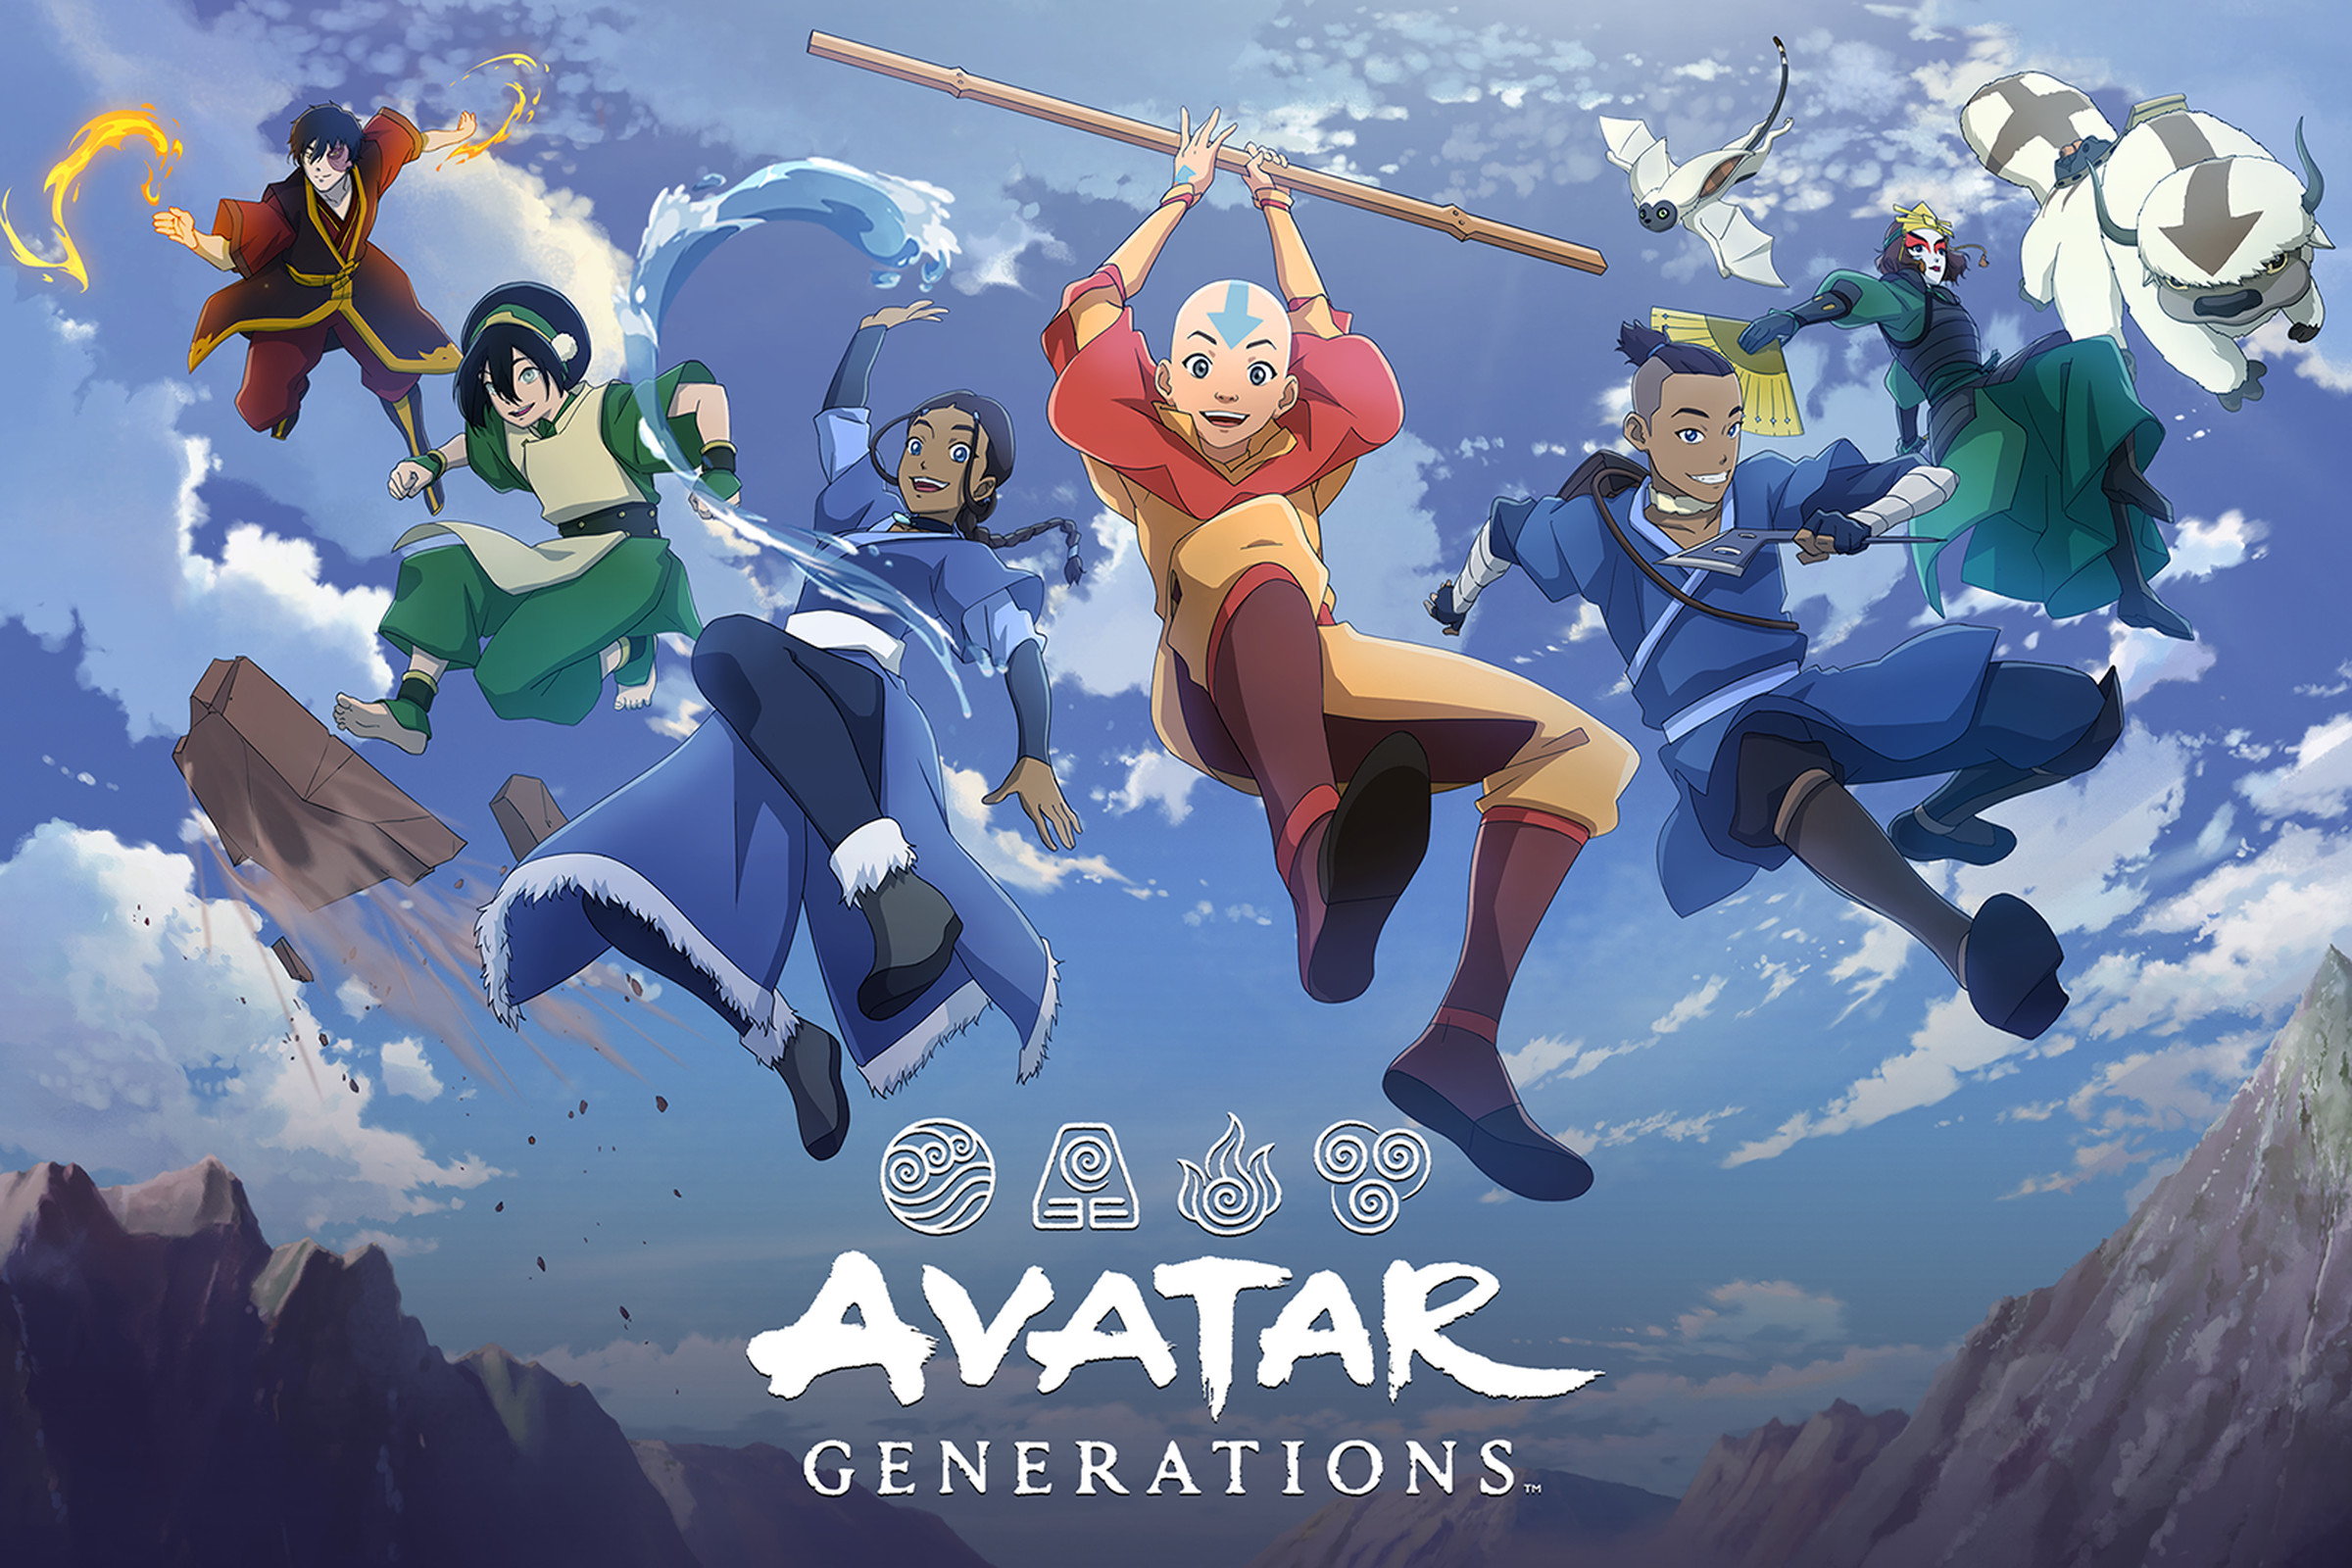 Key art of Avatar Generations featuring Zuko, Toph, Katara, Aang, Sokka, Suki, and Appa flying in the air.